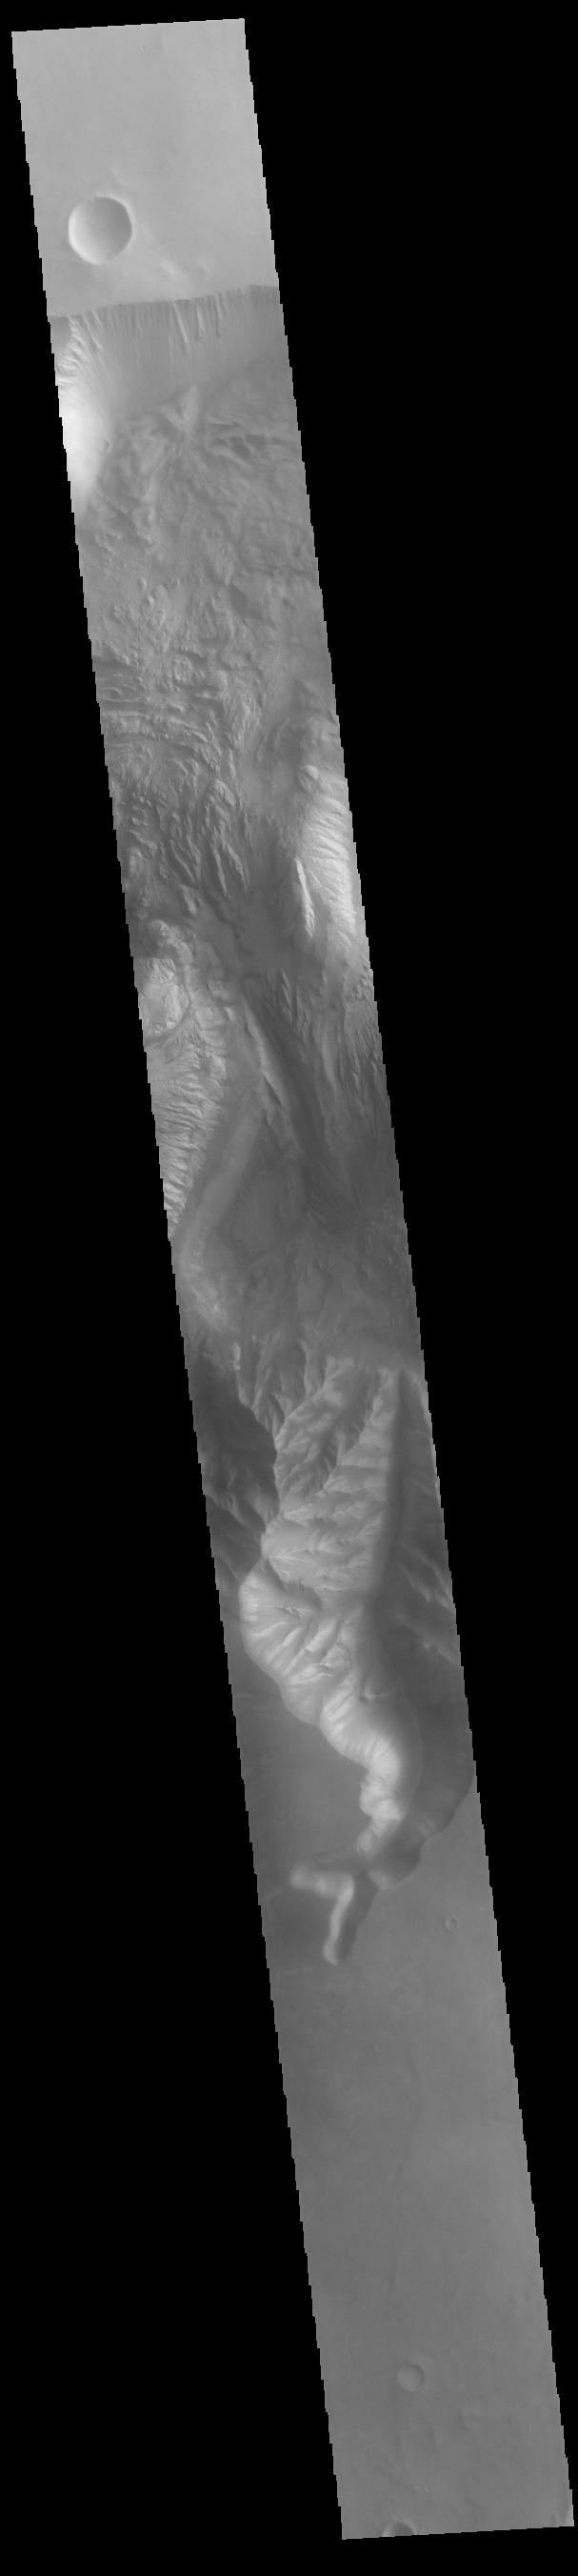 PIA25106: Hebes Chasma